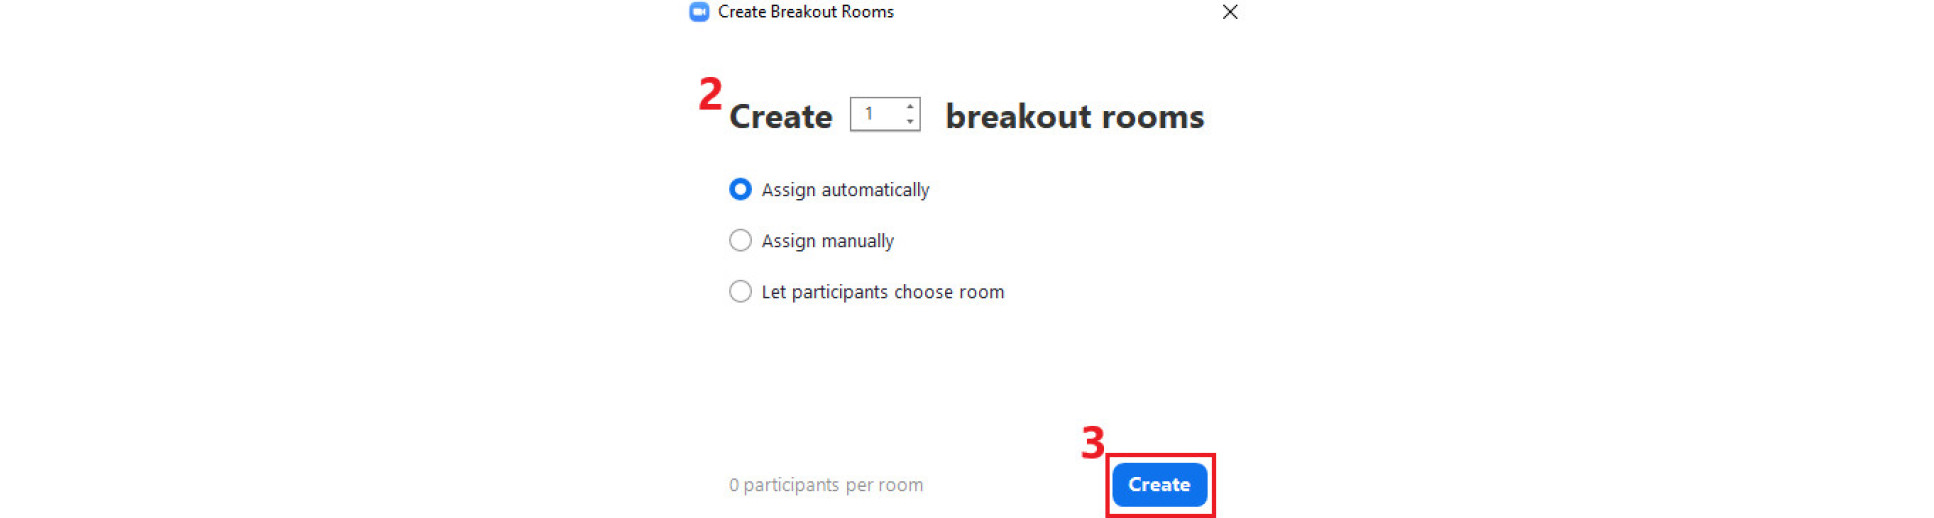 breakout rooms button